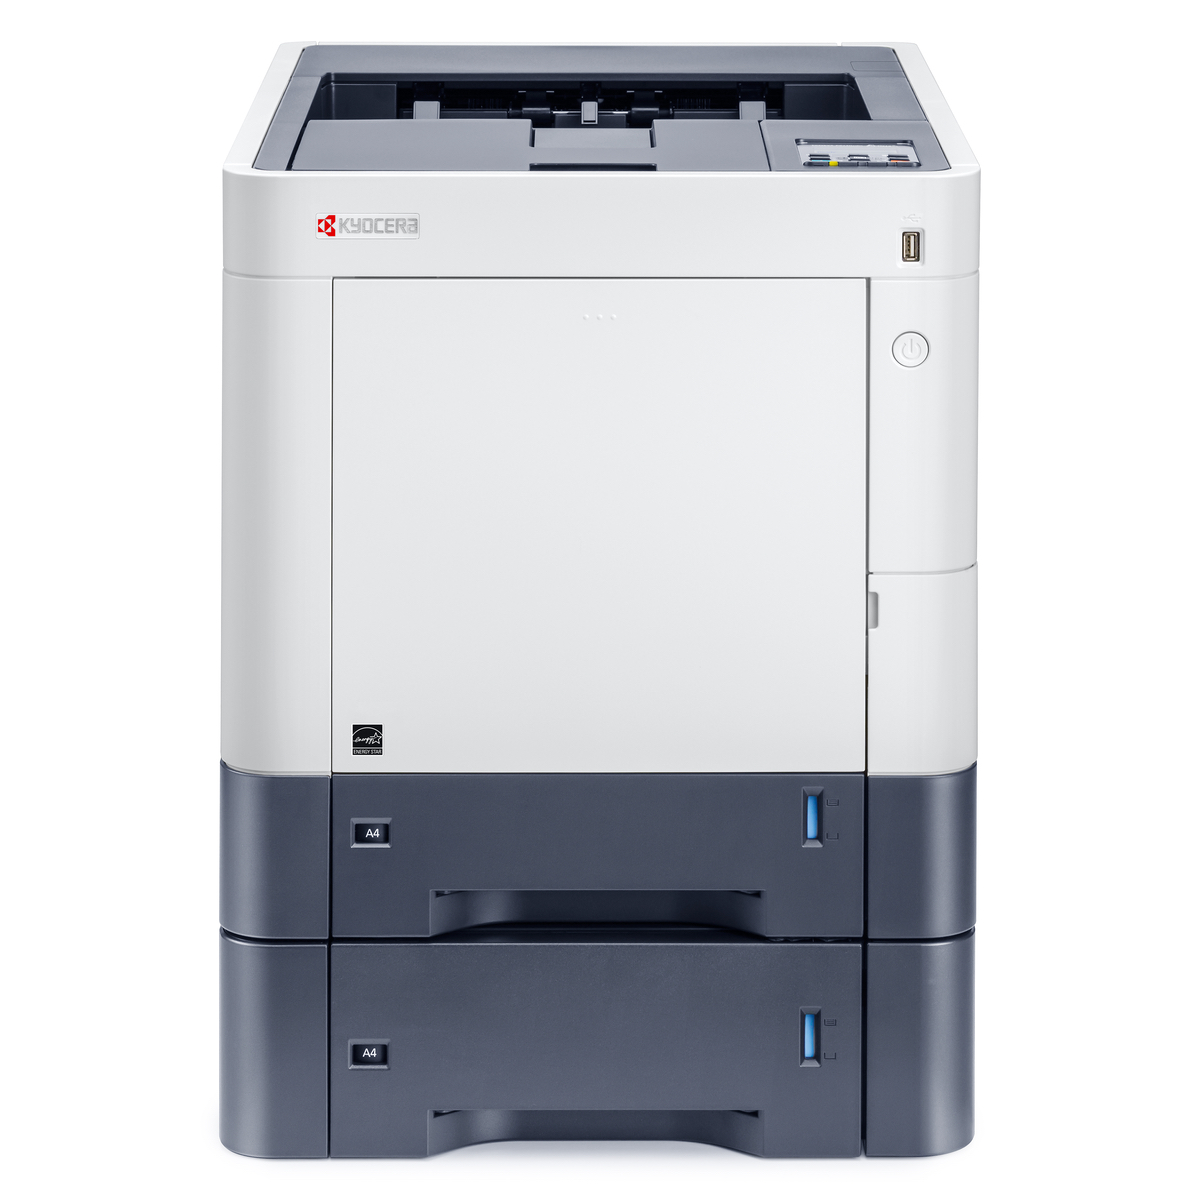 Kyocera Printers:  The Kyocera ECOSYS P6230cdn Printer